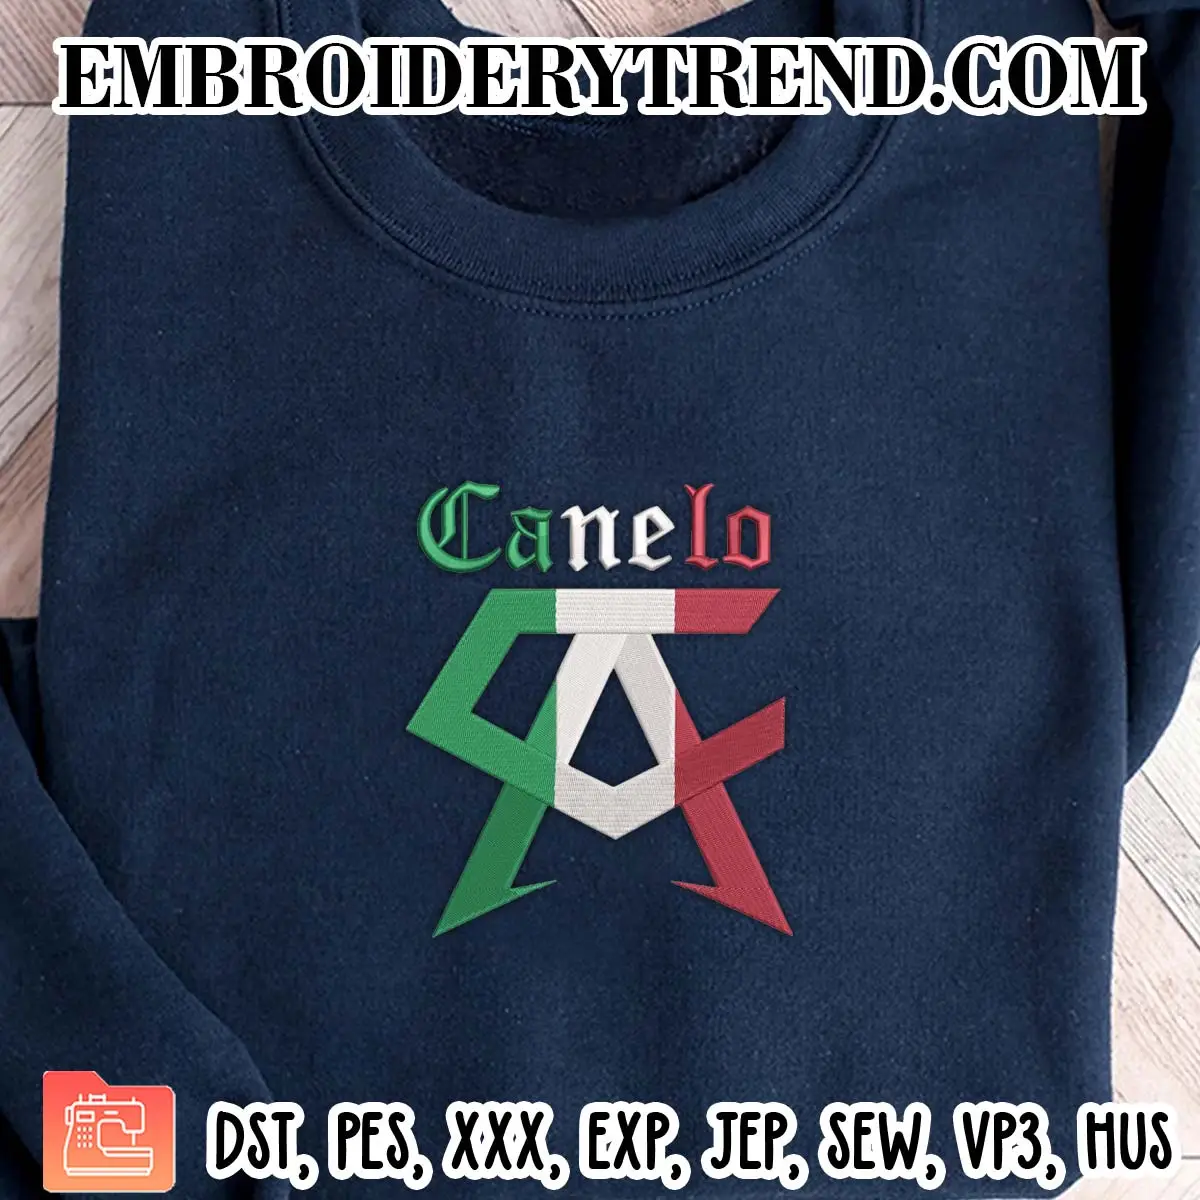 Team Canelo Mexican Embroidery Design, Canelo Alvarez Machine Embroidery Digitized Pes Files